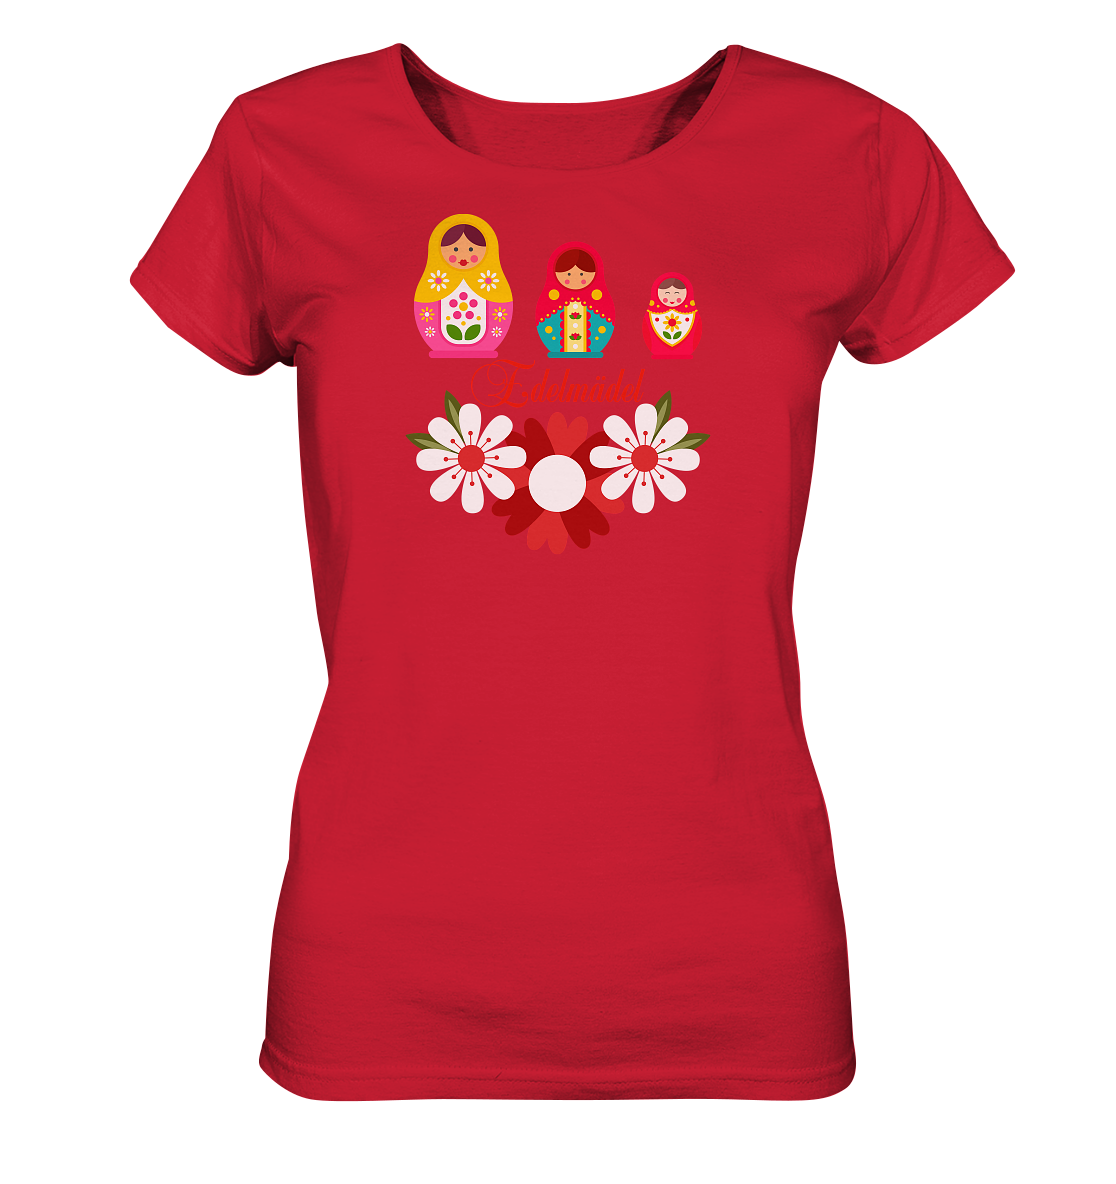 Shirt Edelmädel Family - Ladies Organic Shirt - viele Farben